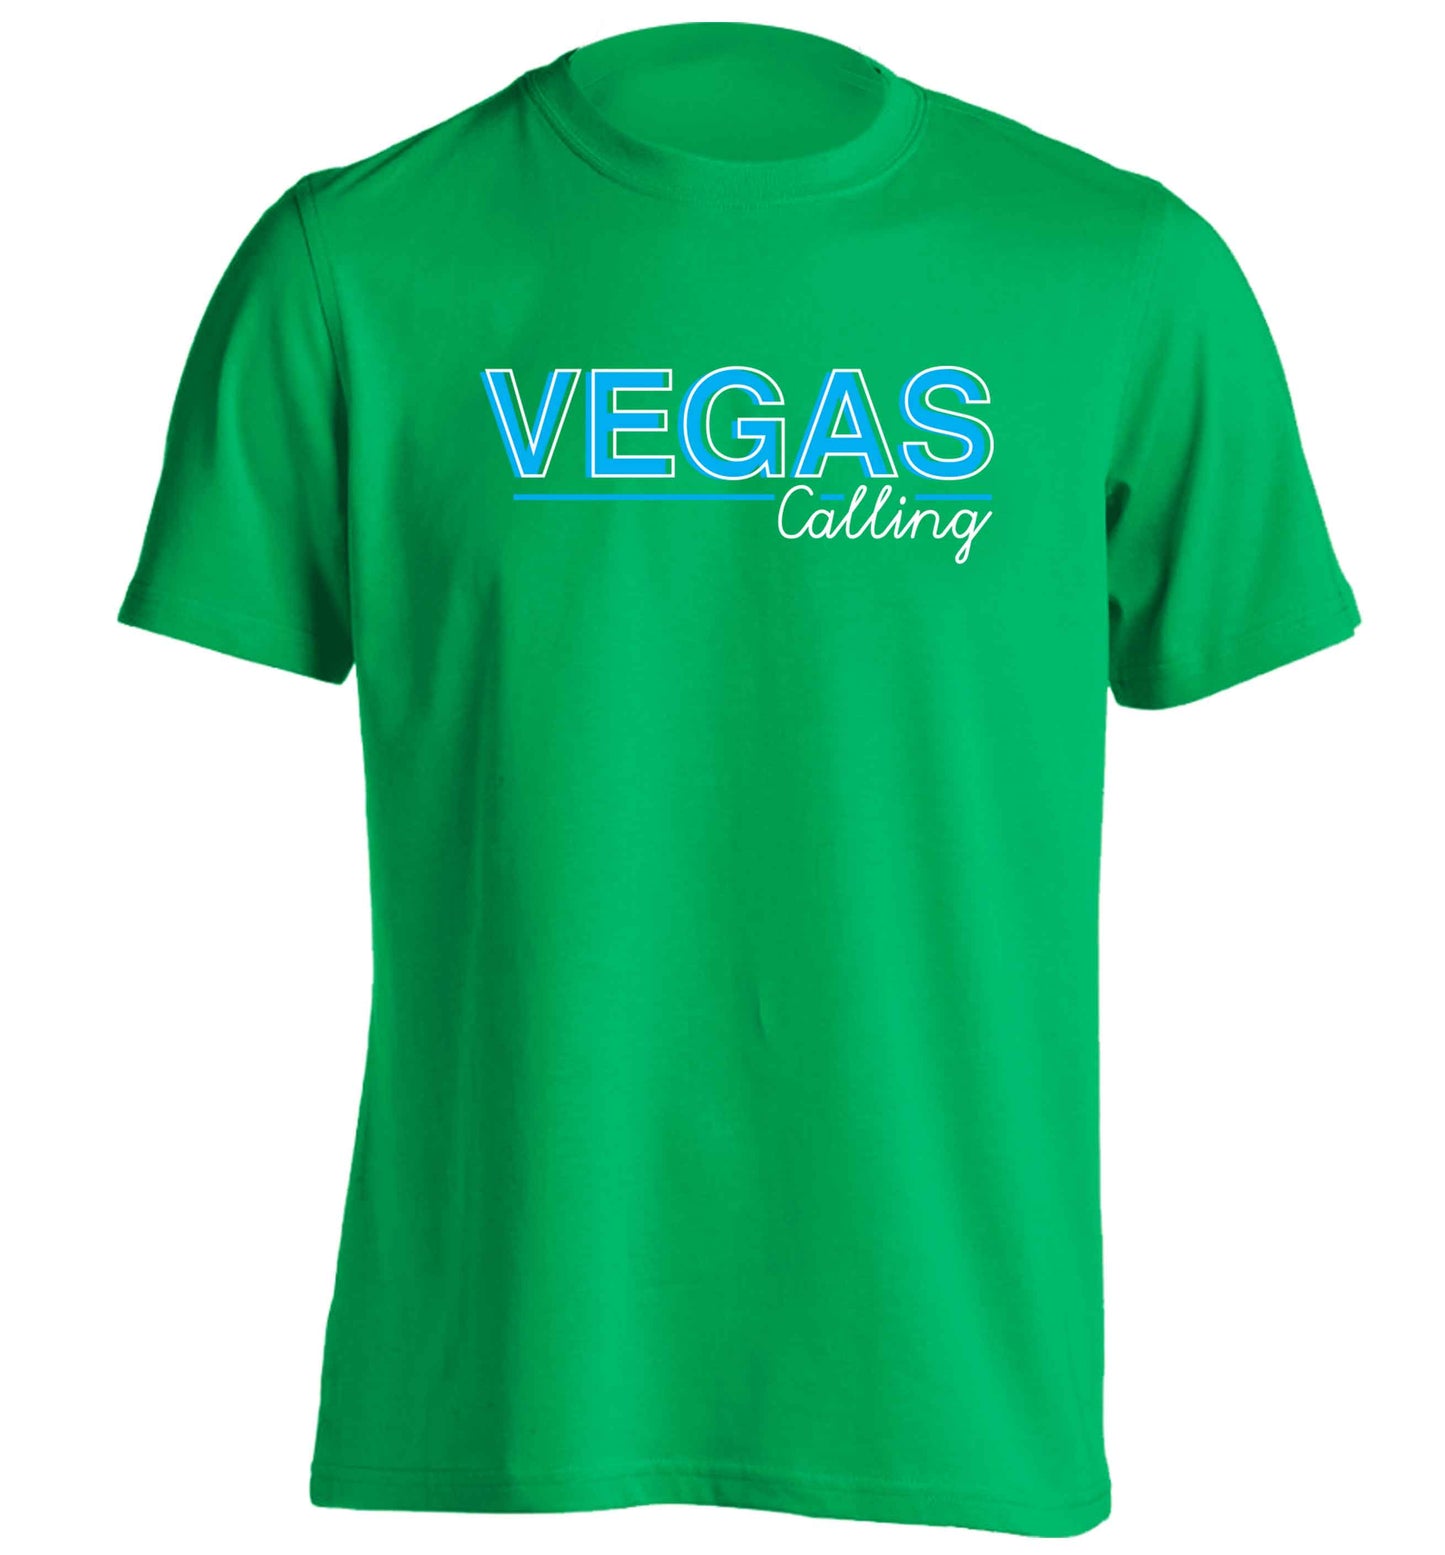 Vegas calling adults unisex green Tshirt 2XL